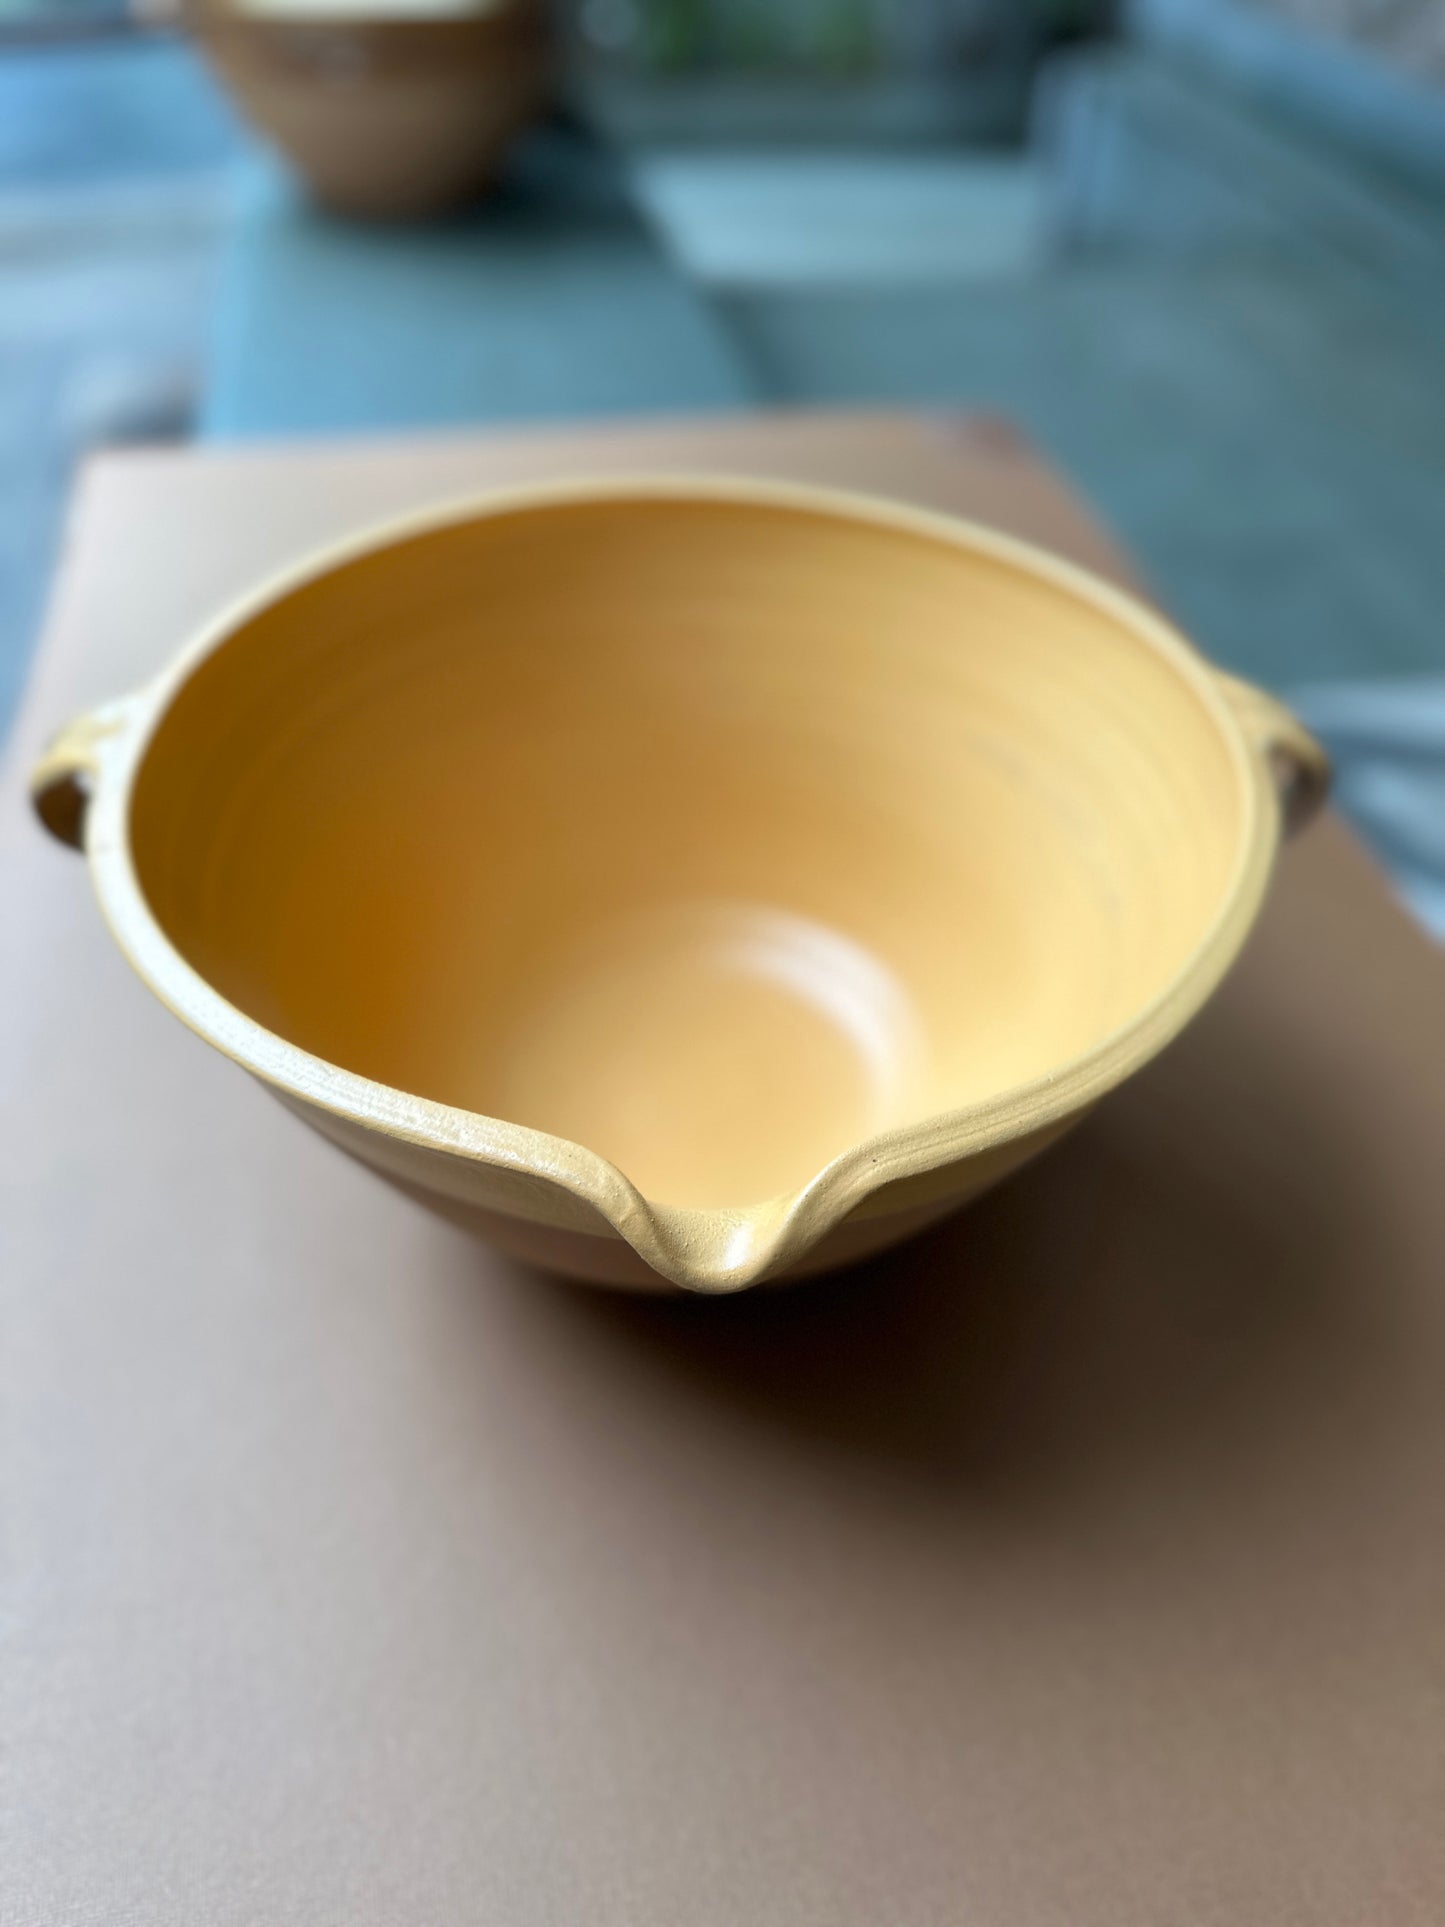 the mixing bowl - choto / small